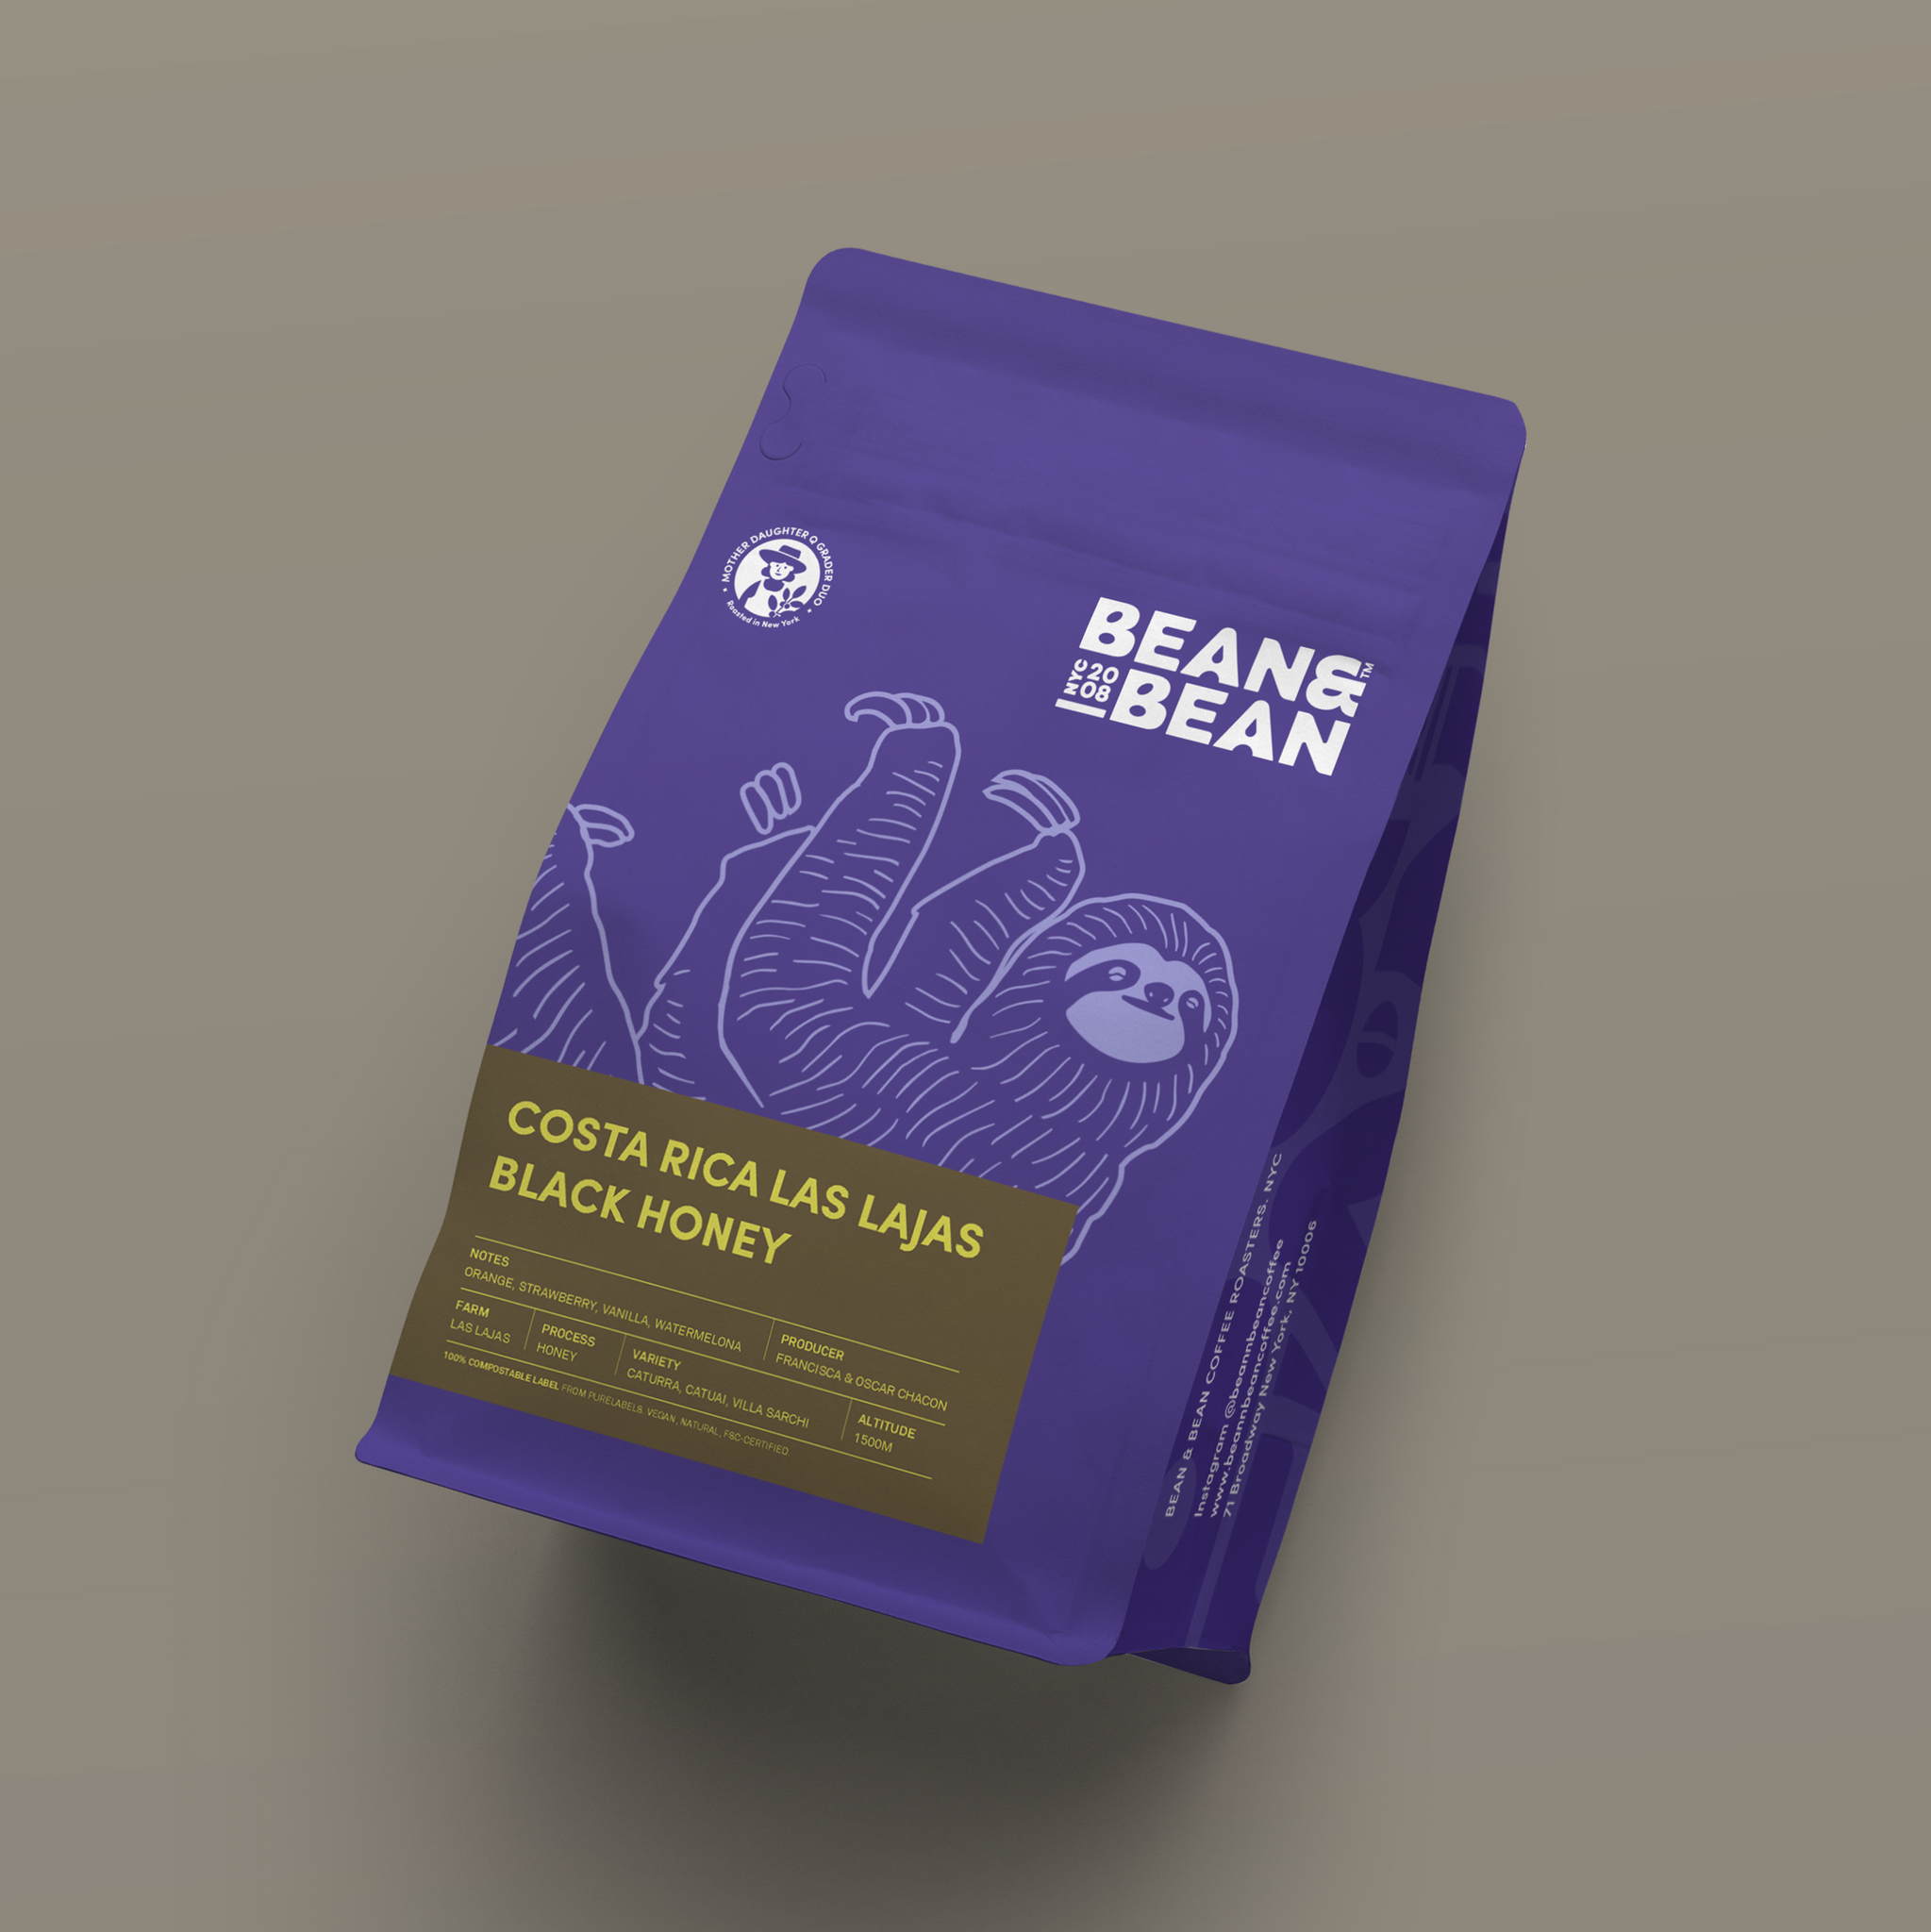 Purple "Bean & Bean Coffee Roasters" bag with a brown label that says "Costa Rica Las Lajas Black Honey"